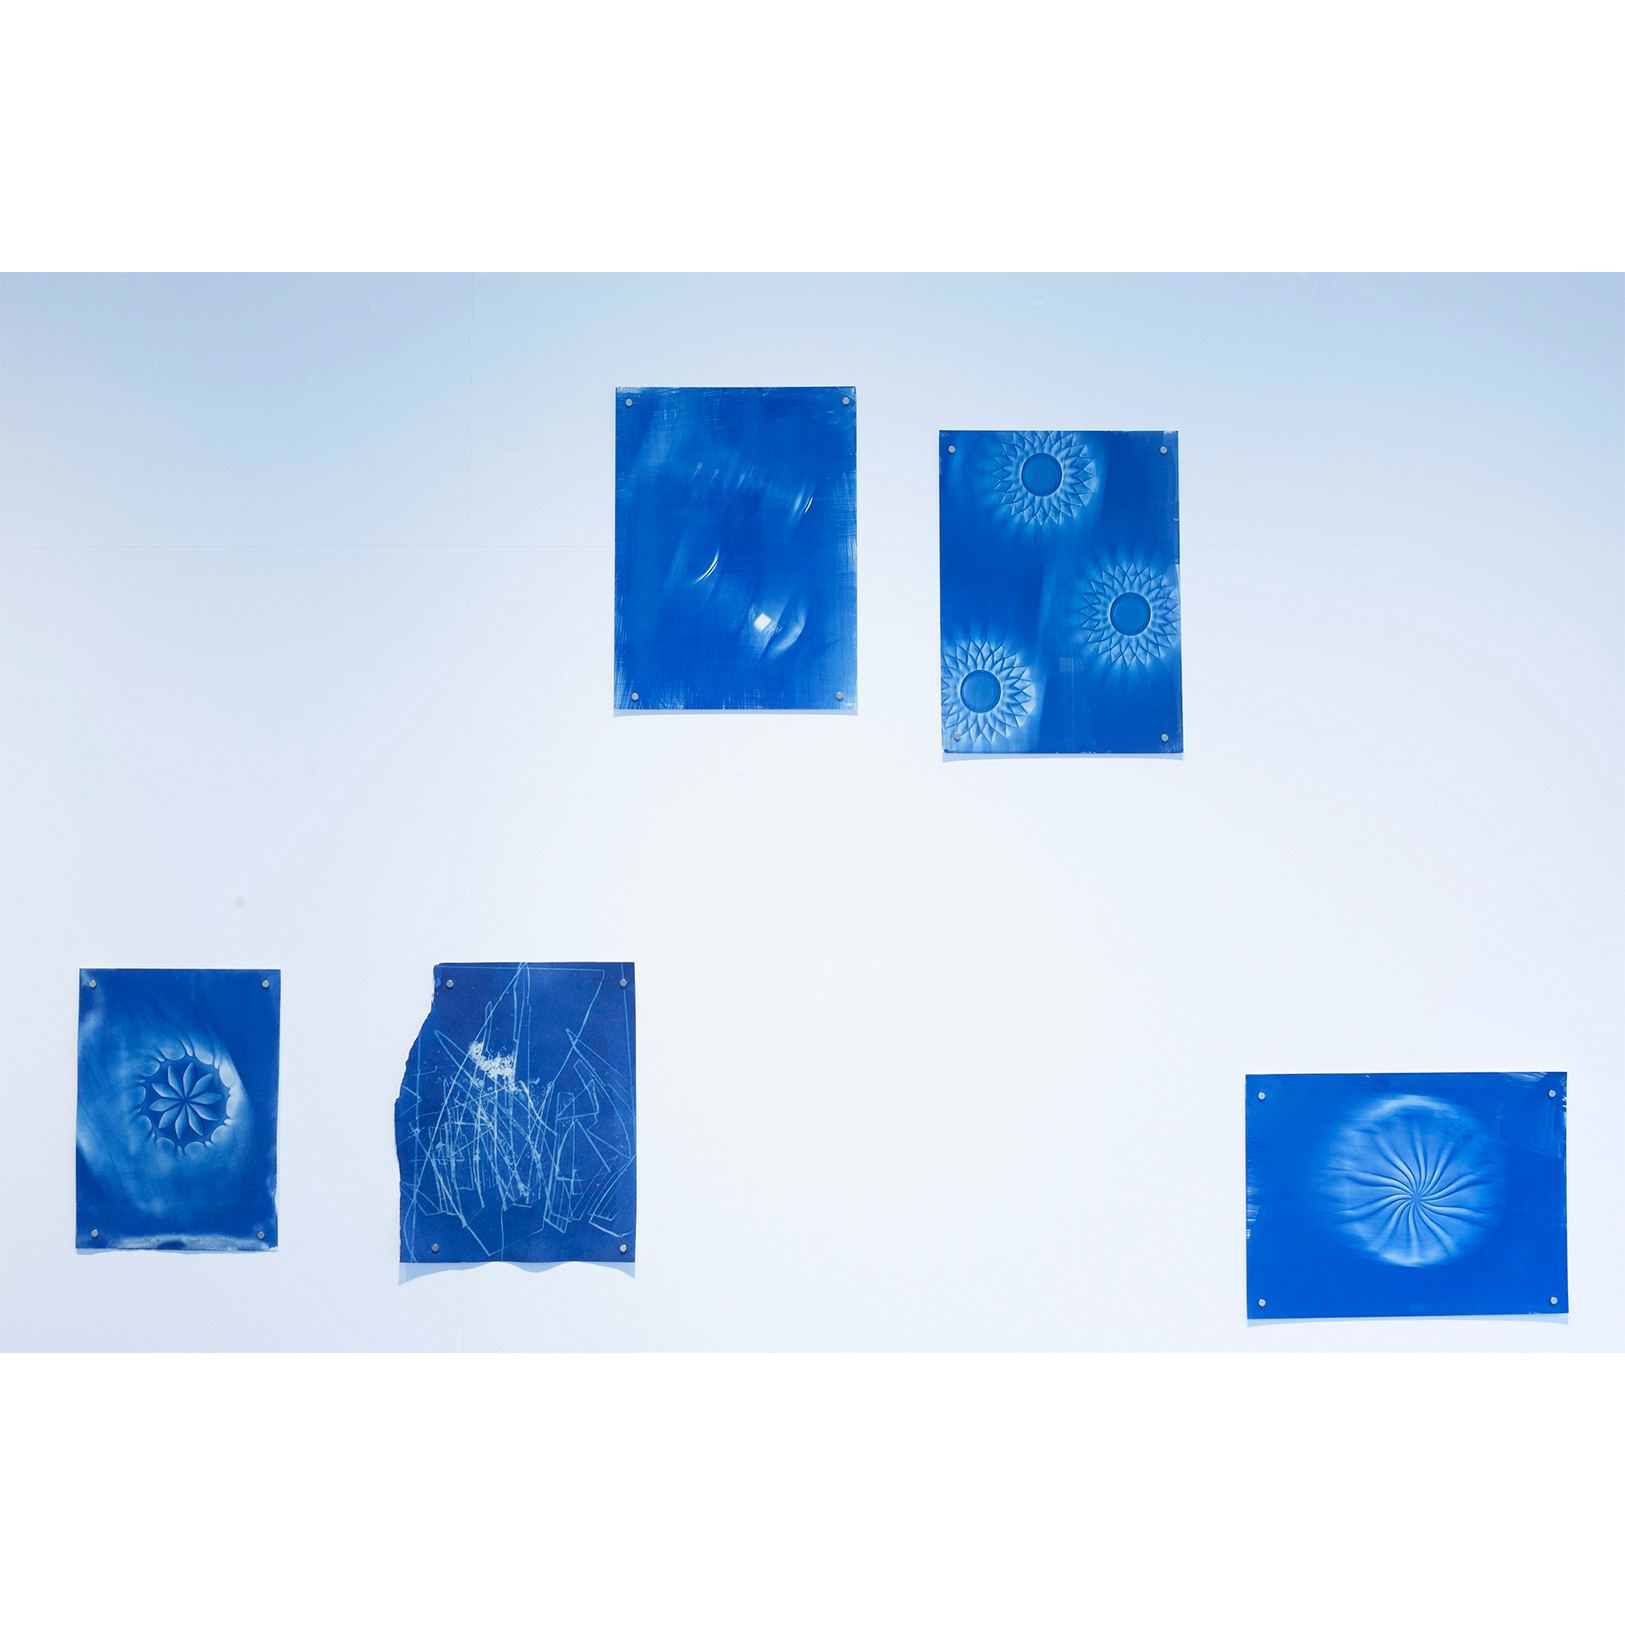 Jens Sundheim<br>《unique cyano type prints》001